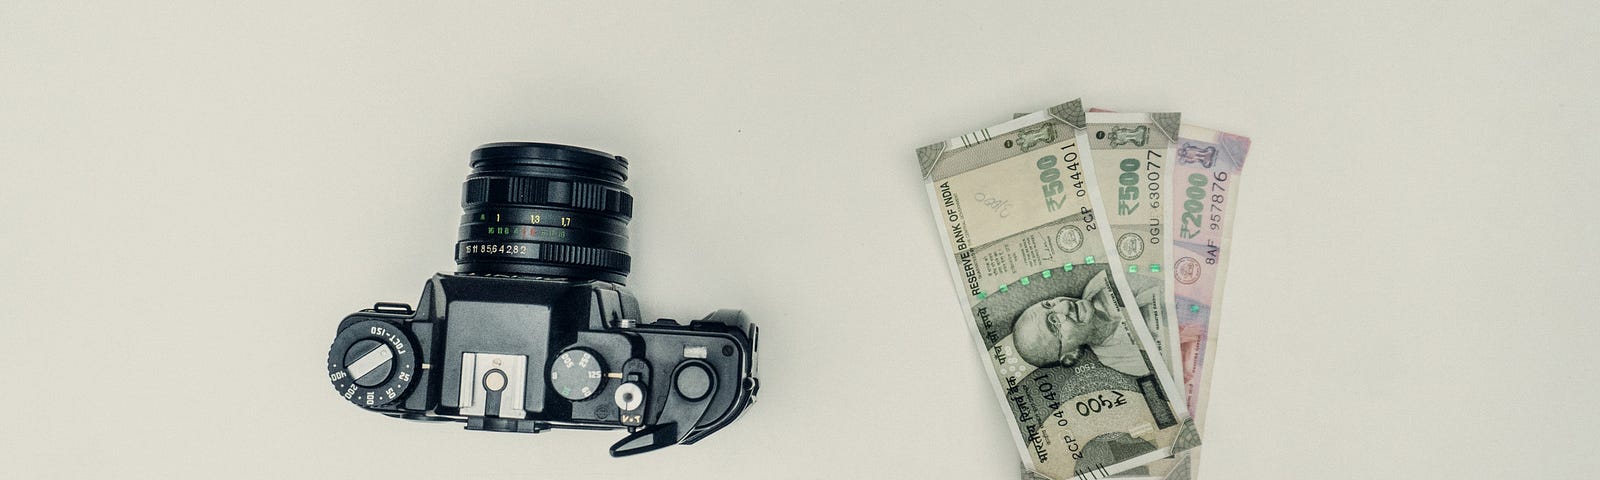 a vintage camera with cash